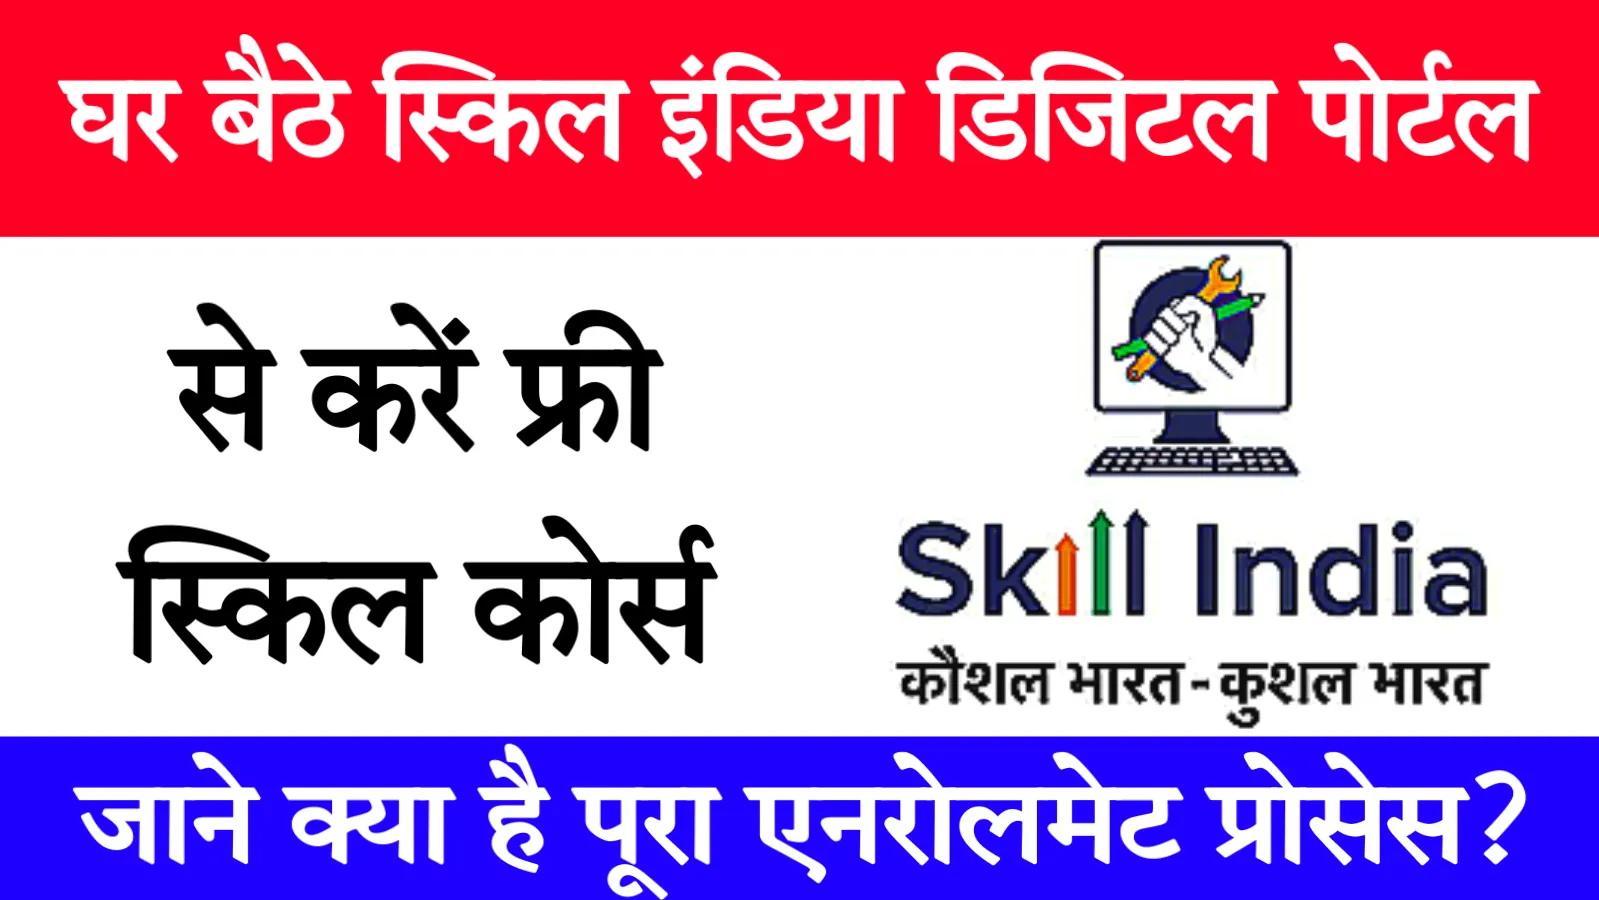 Skill India Digital